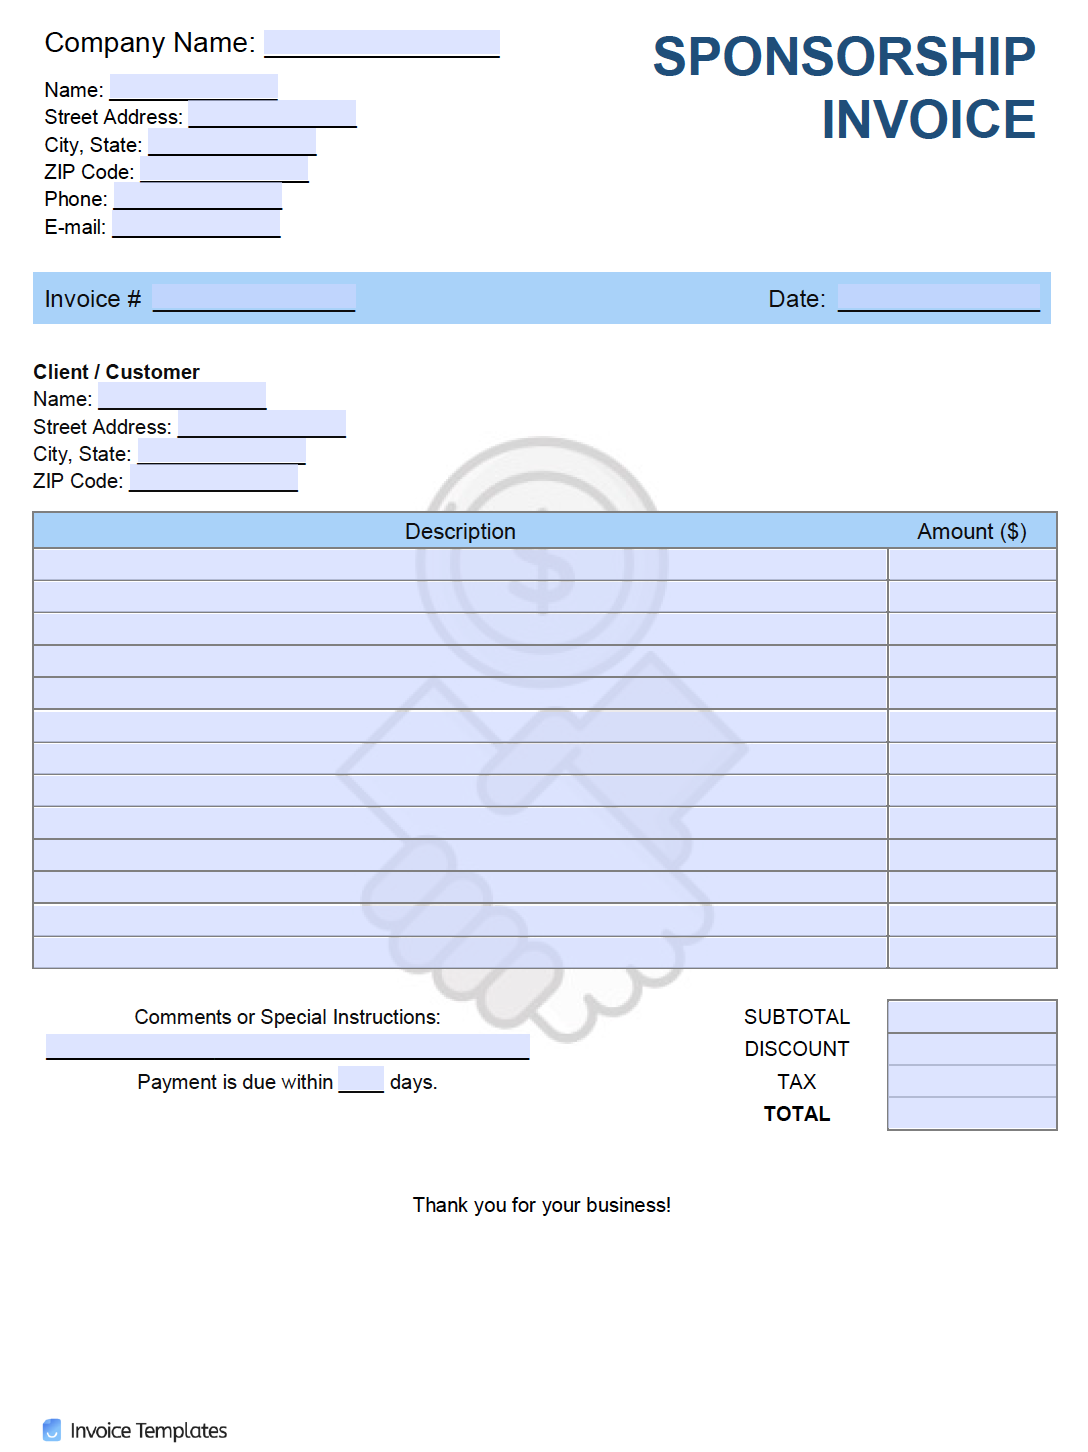 Free Sponsorship Invoice Template  PDF  WORD  EXCEL Regarding Blank Sponsor Form Template Free